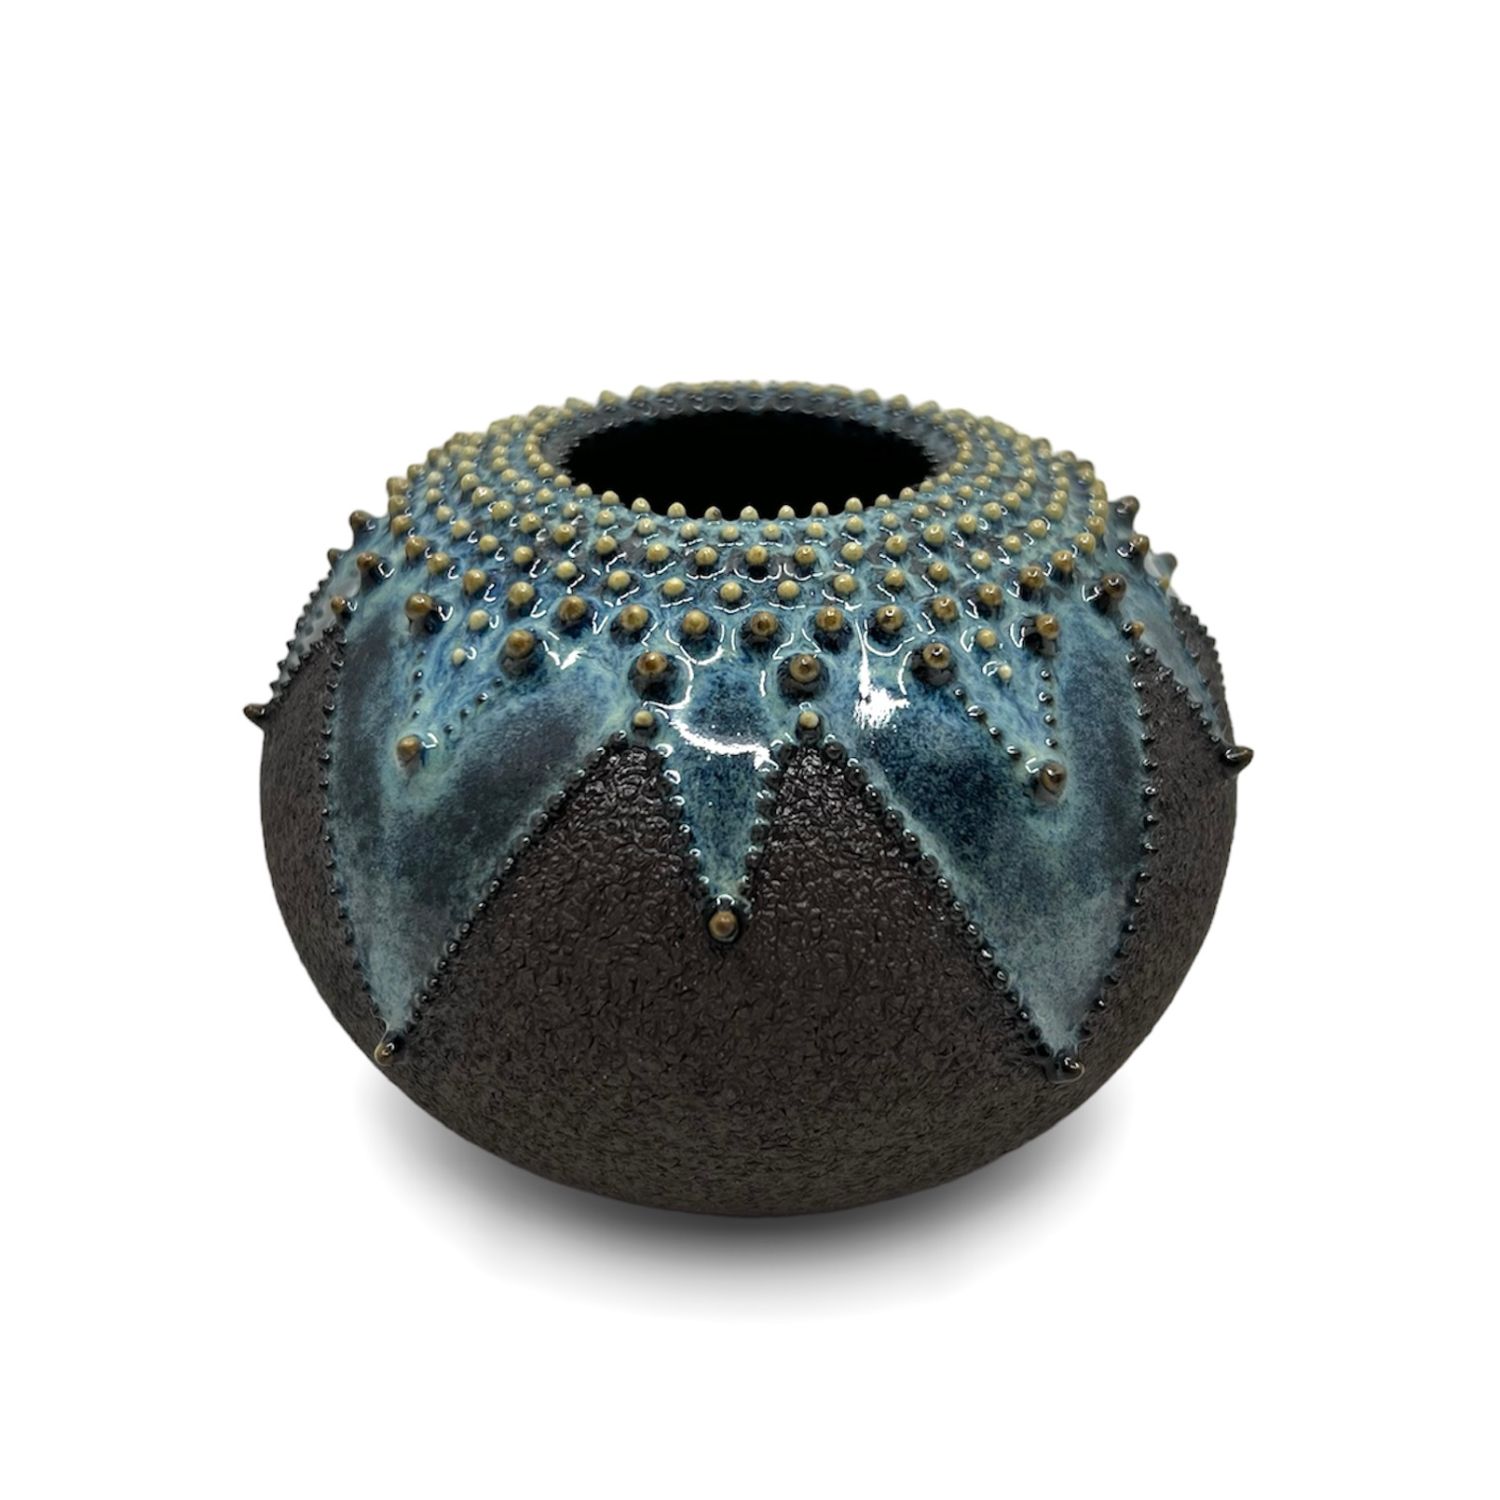 Zara Gardner: Black & Turquoise Urchin Sculpture Product Image 1 of 2